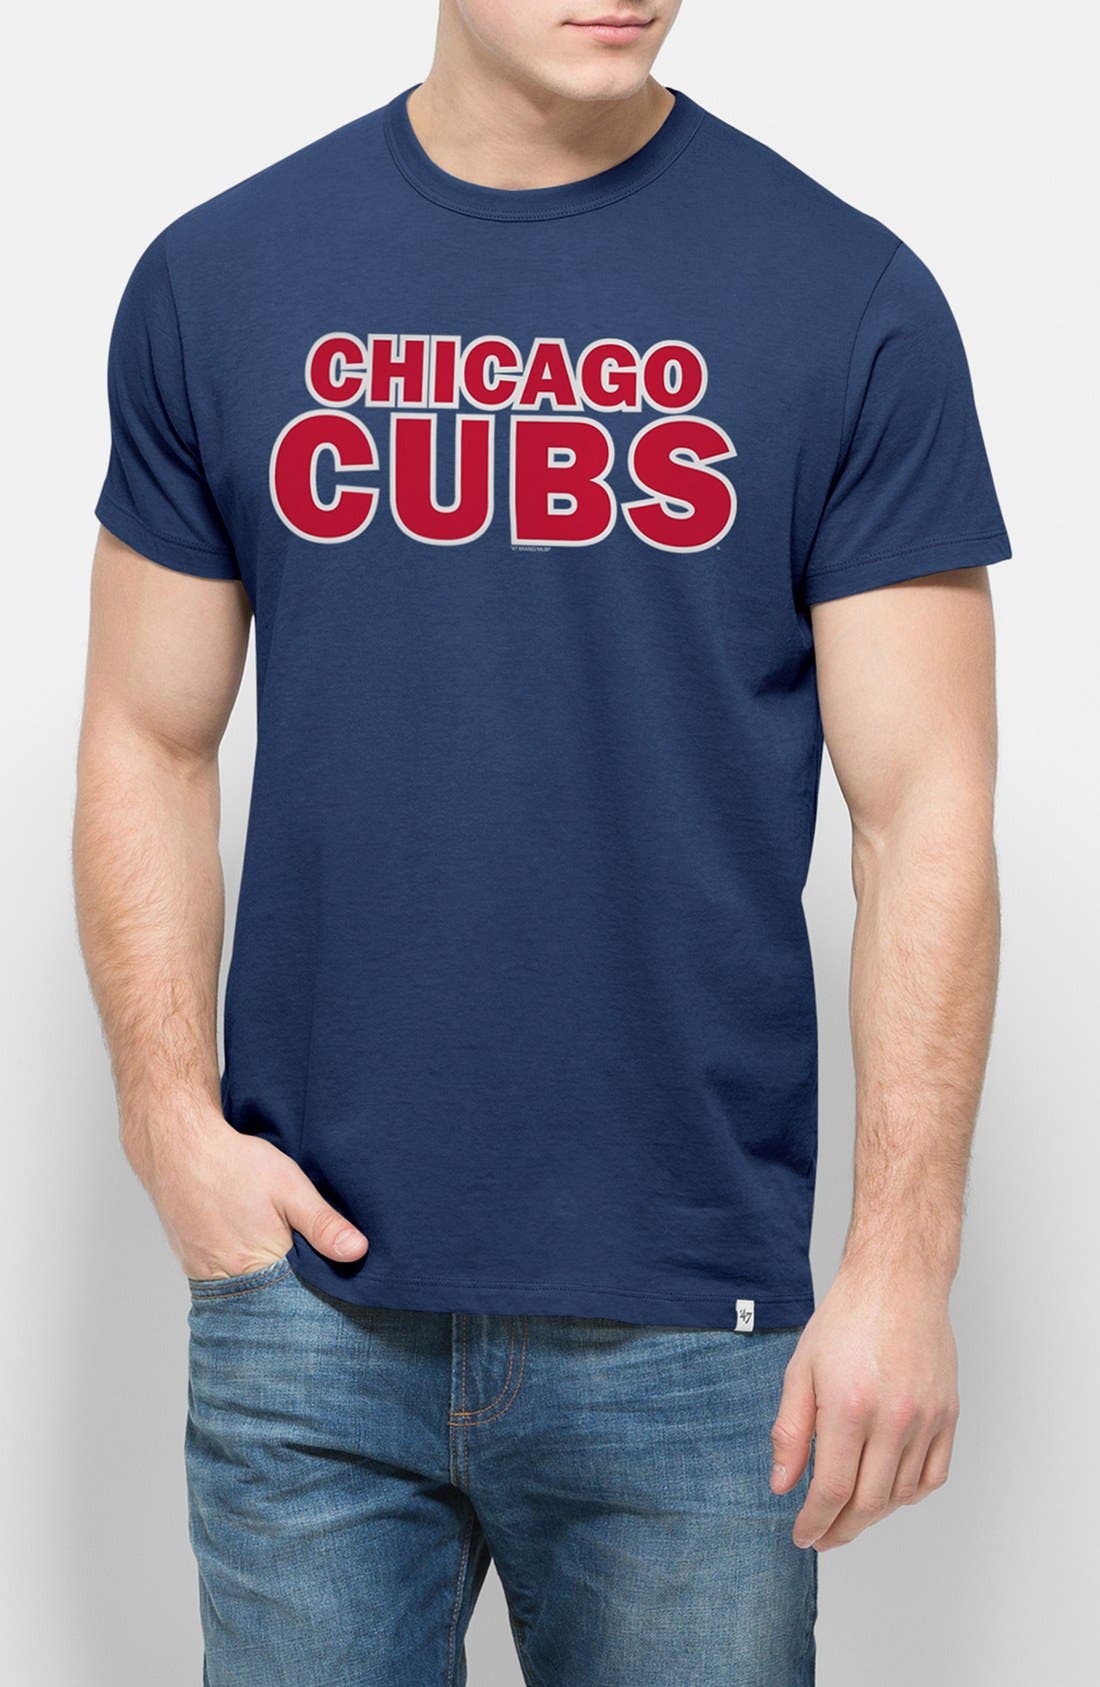 chicago cubs w shirt